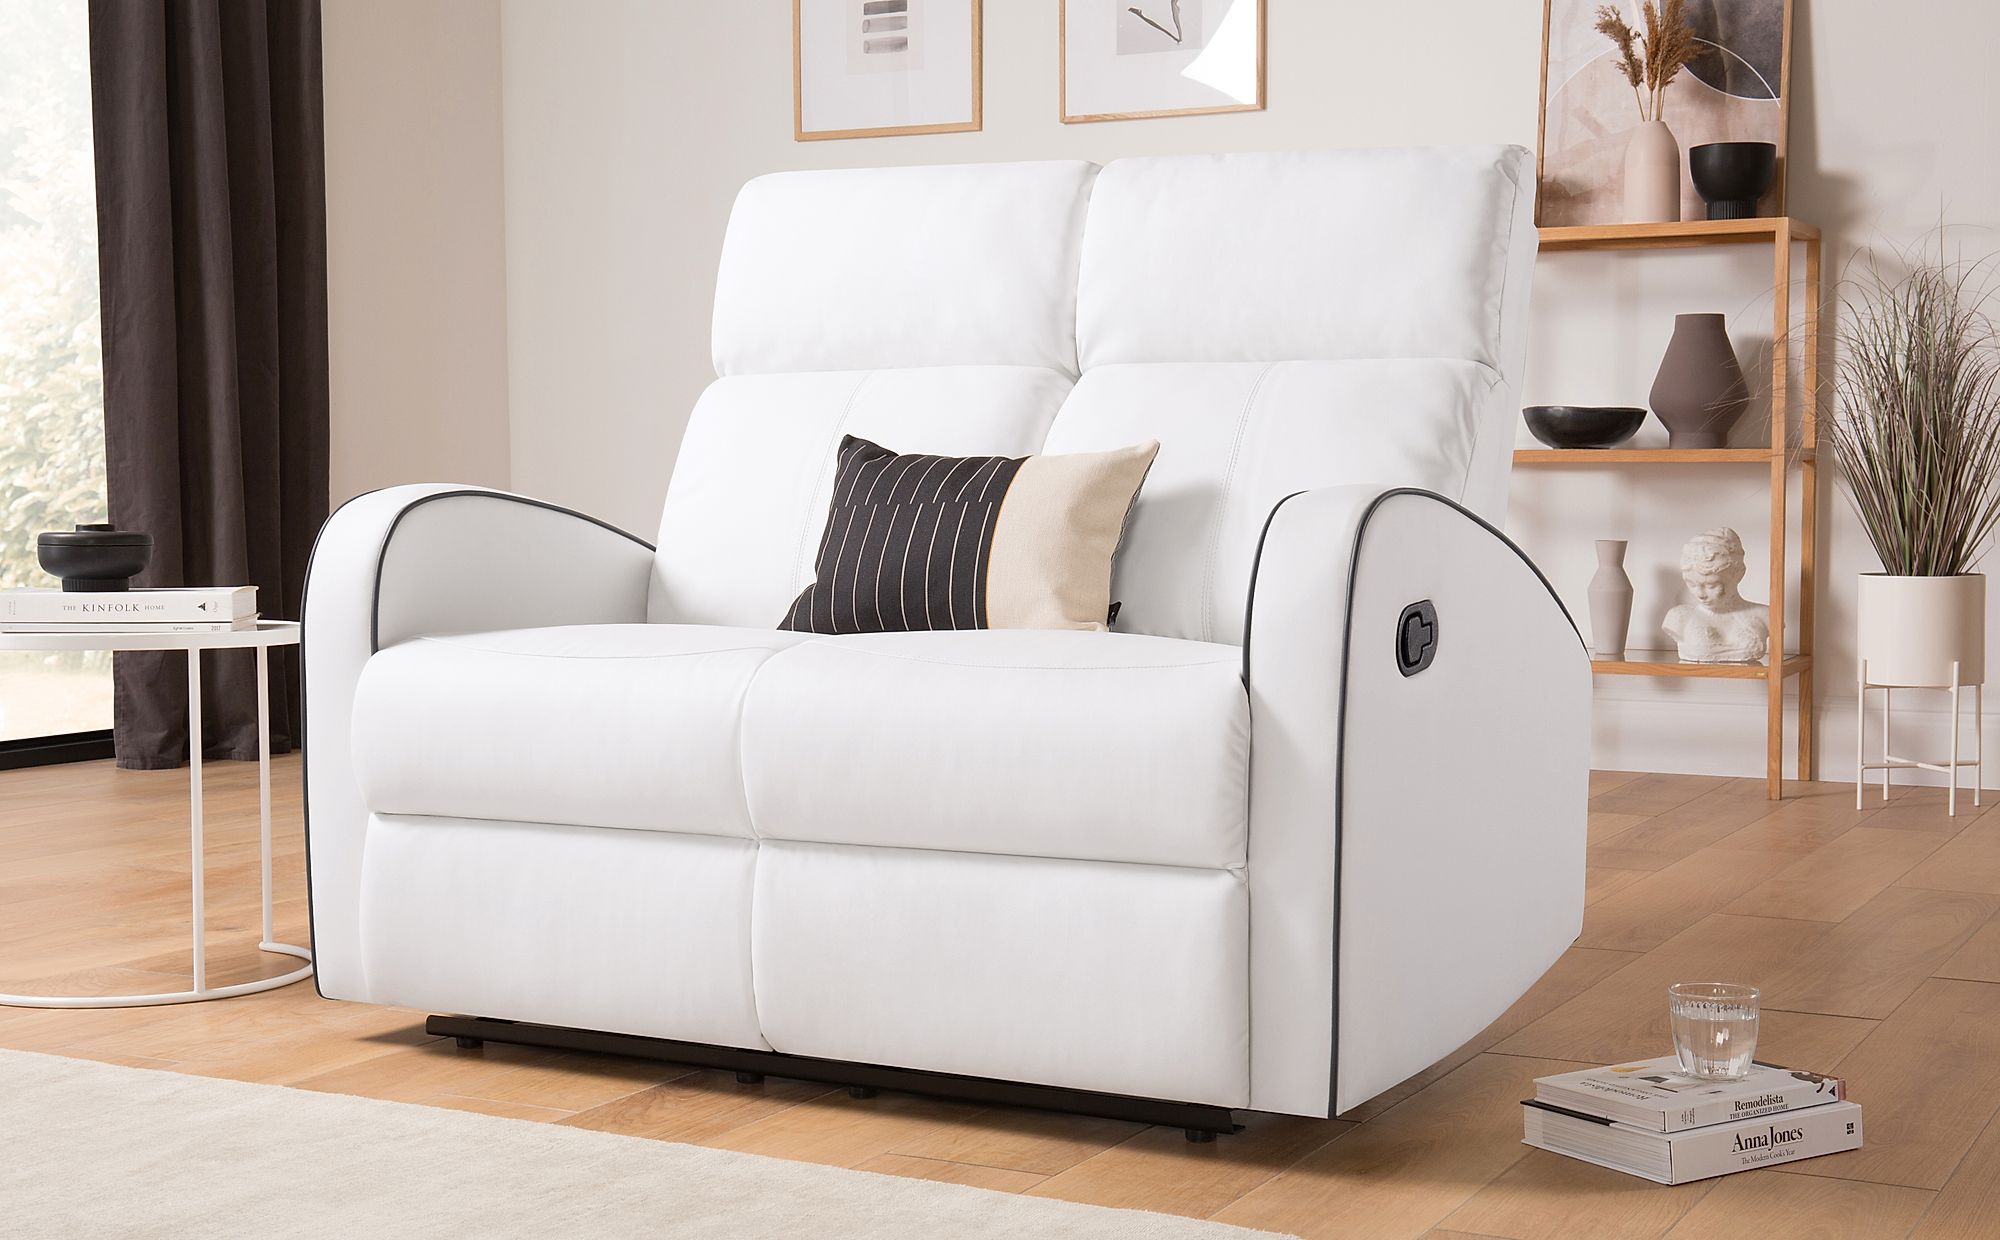 2 seater white leather sofa